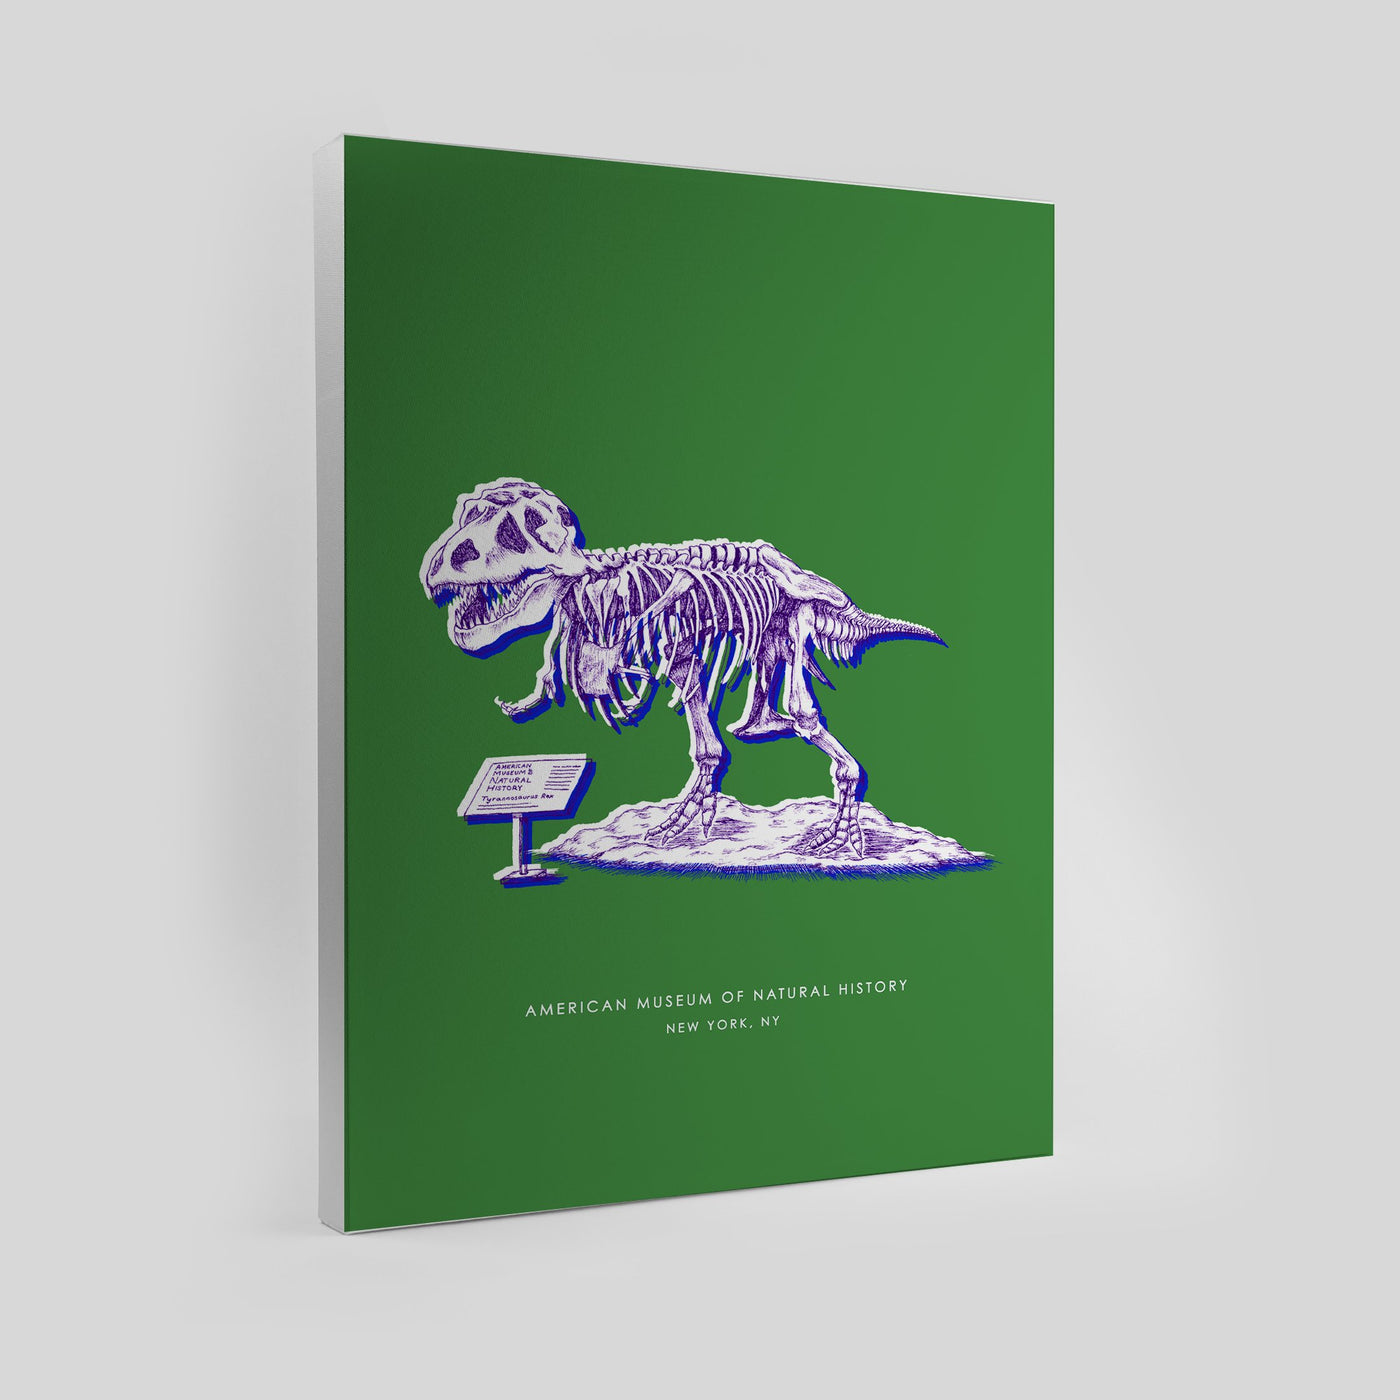 Gallery Prints Green Canvas / 8x10 / Unframed New York Dinosaur Print dombezalergii